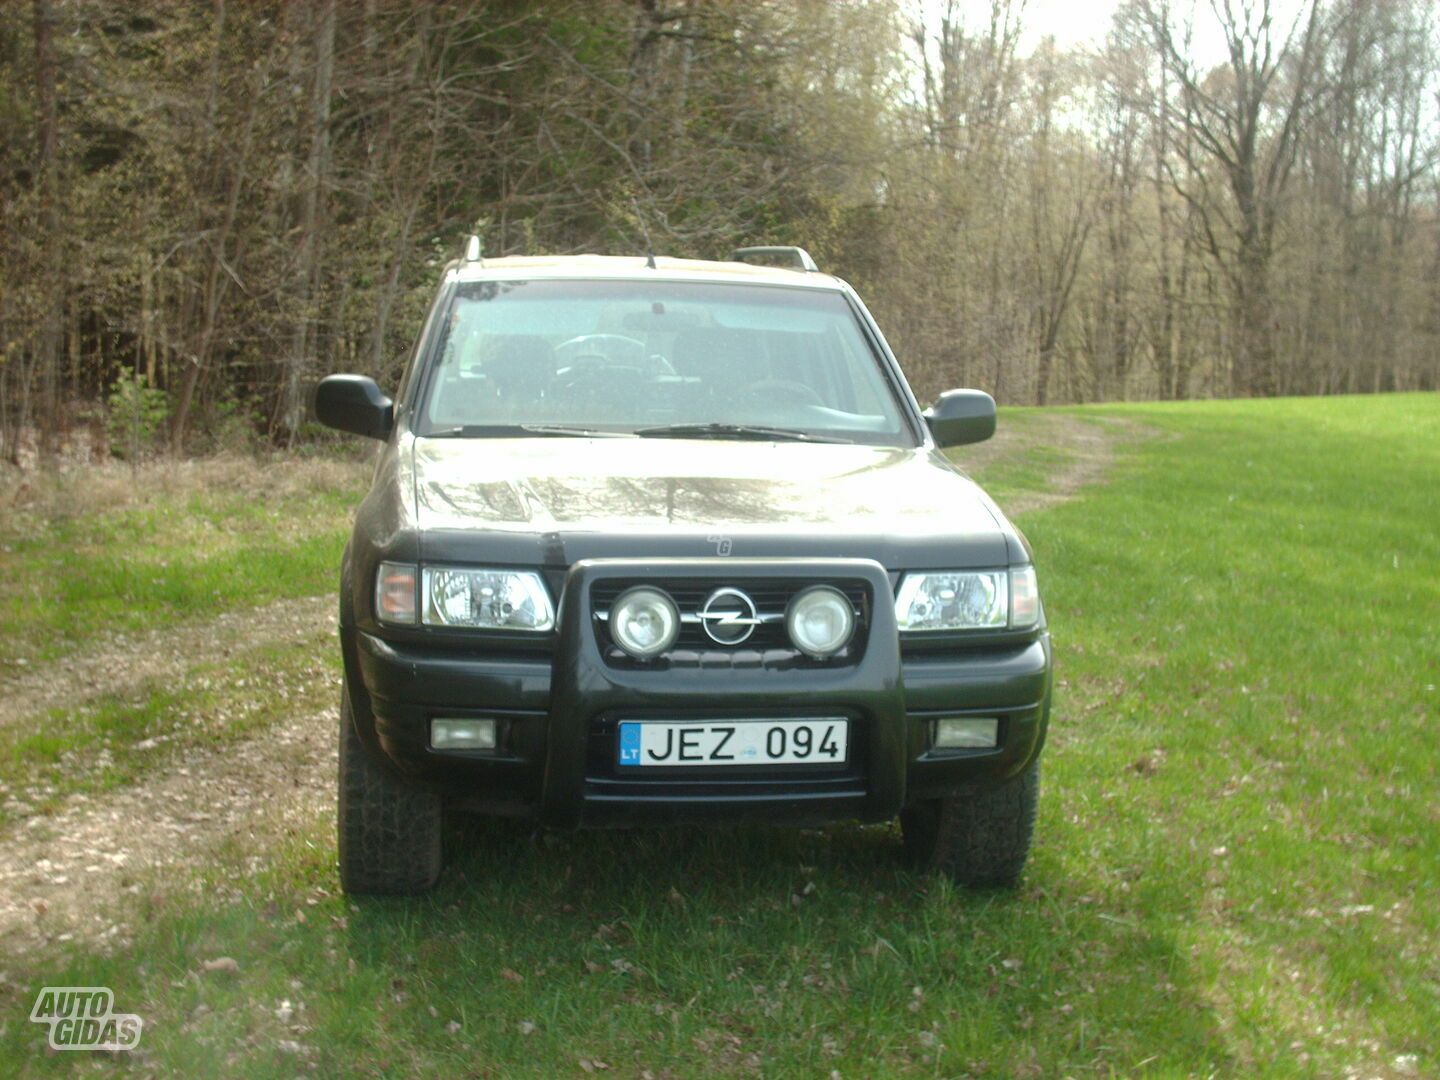 Opel Frontera DTI Sport RS 2002 y